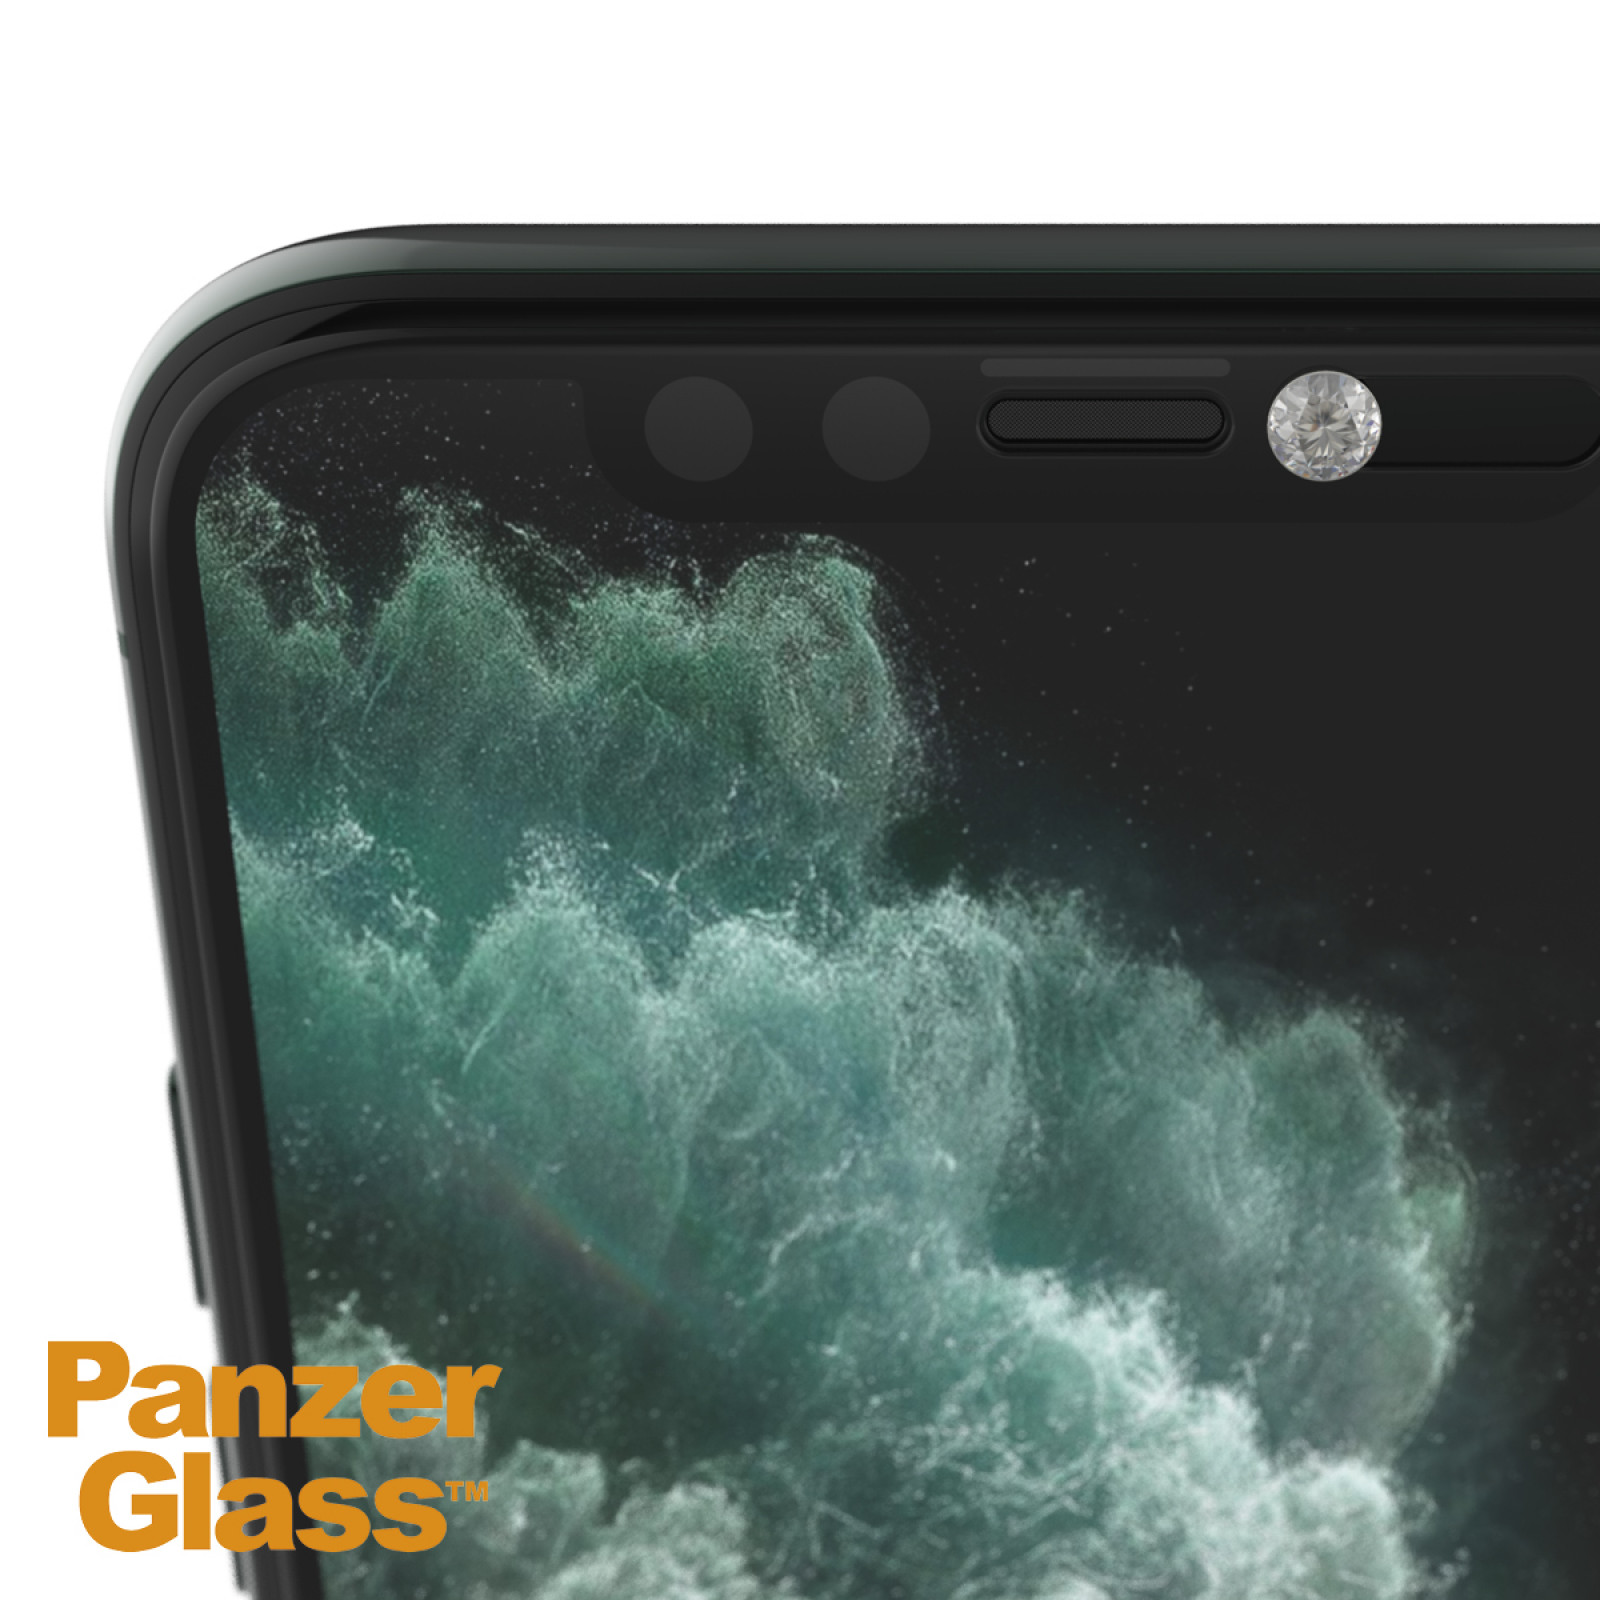 Стъклен протектор PanzerGlass за Apple iPhone Xs Max/11 Pro Max Case Friendly CamSlider Swarovski Edition Черен